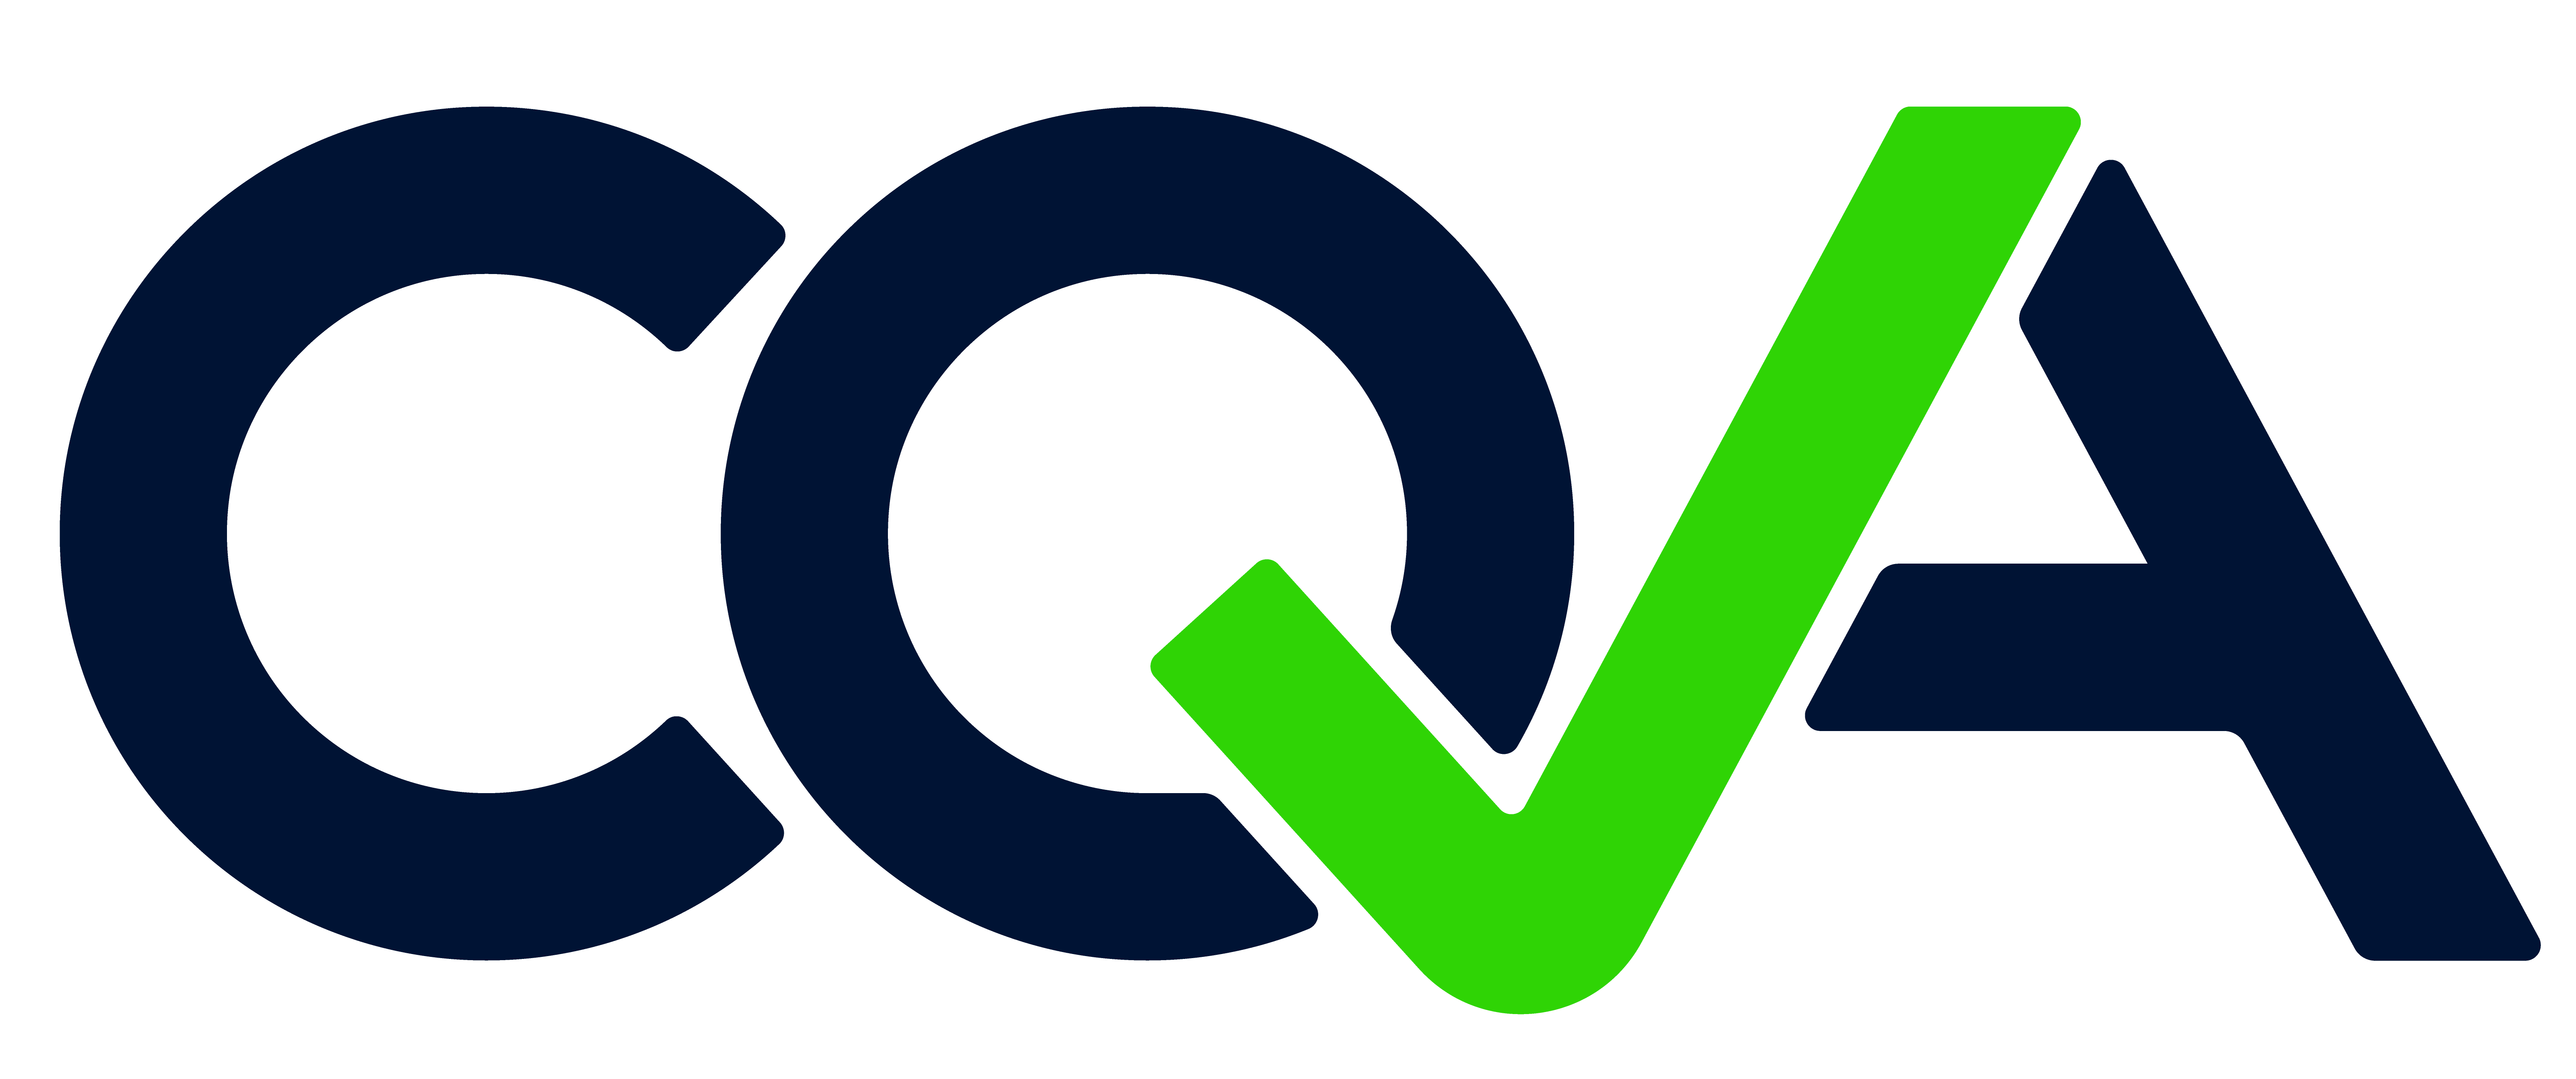 Construction QA logo